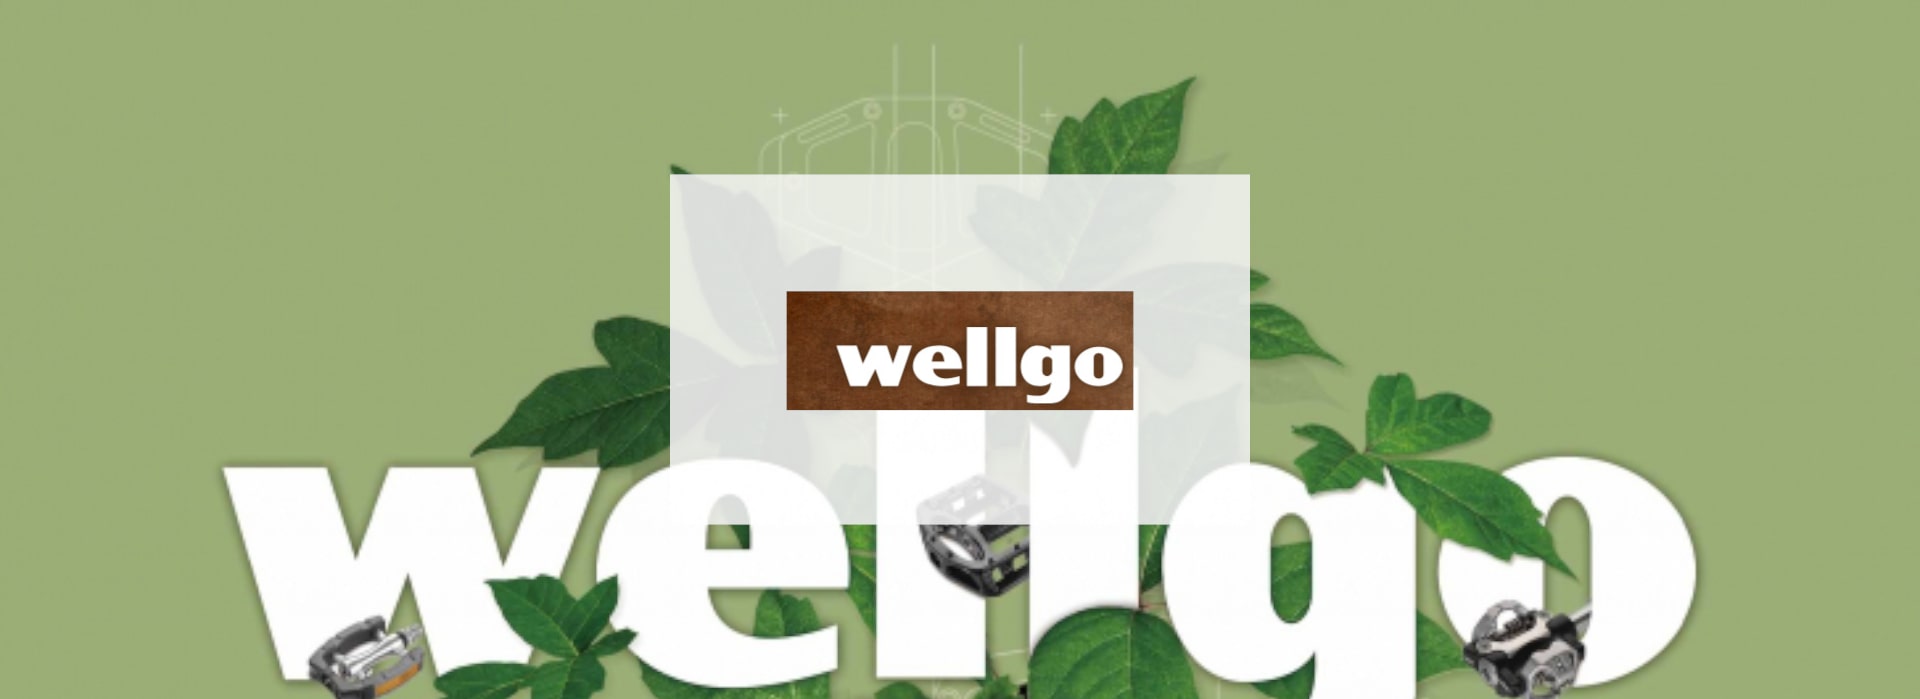 wellgo banner